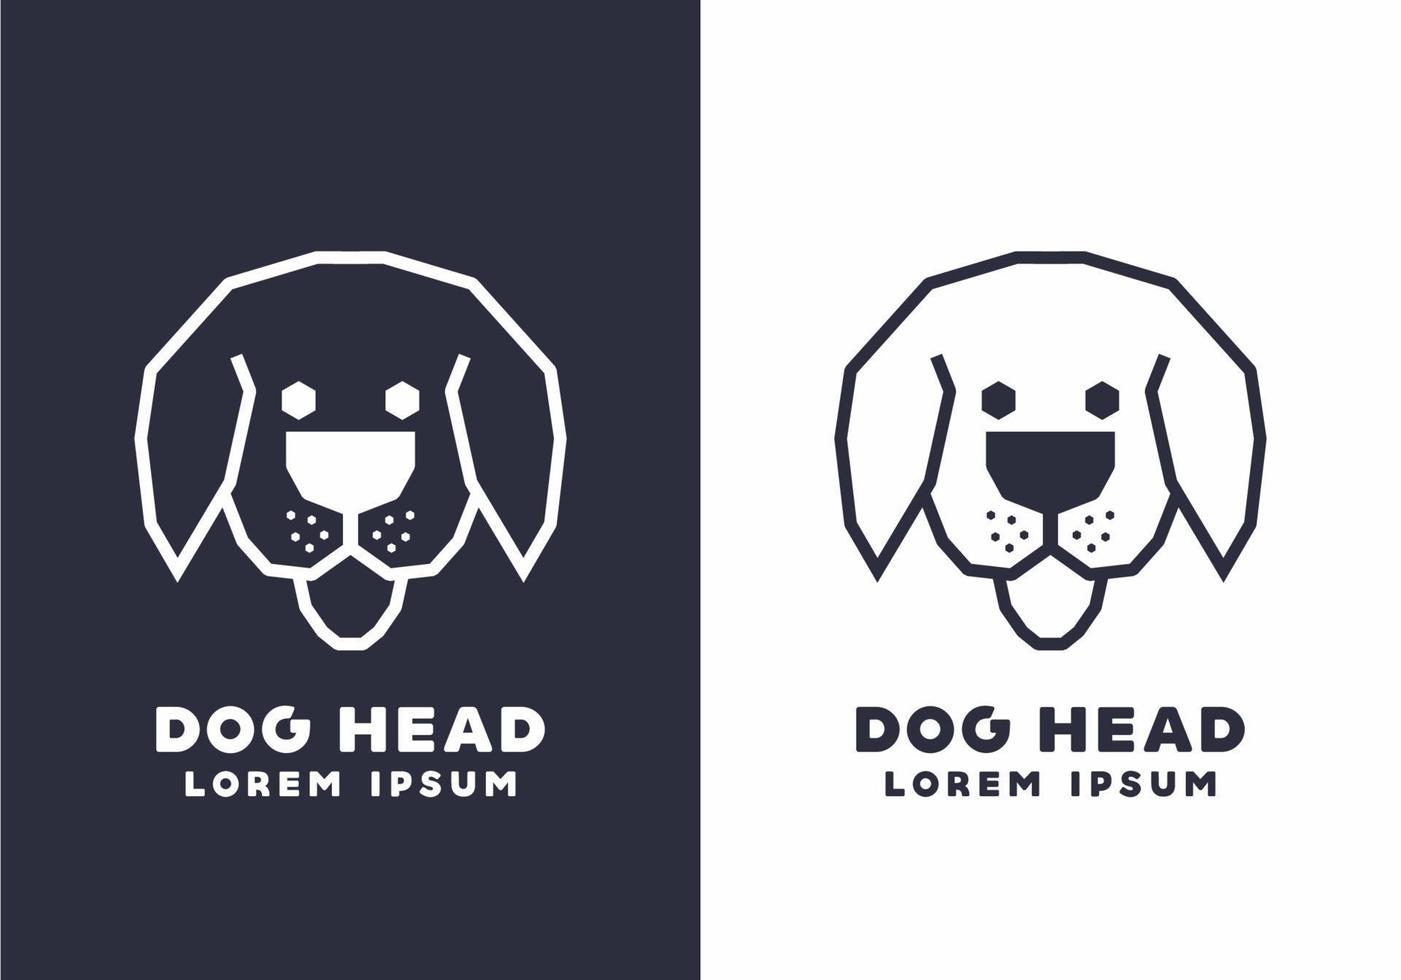 Stiff art style of two dog head vector